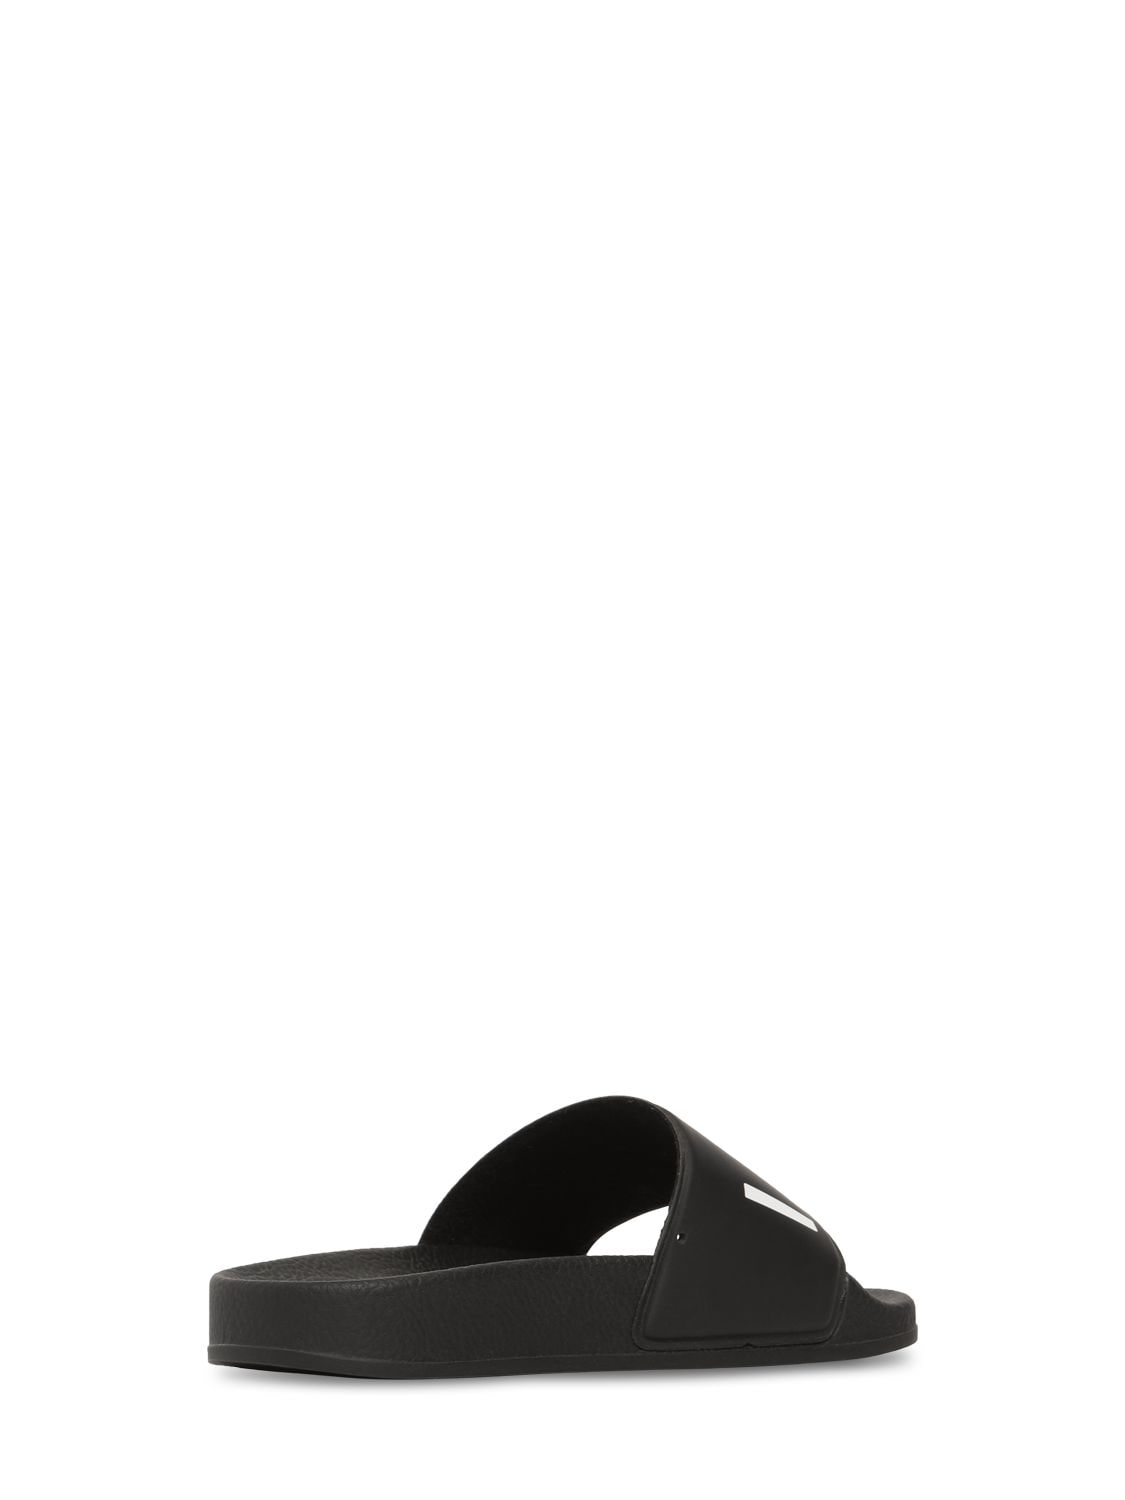 Shop Dsquared2 Icon Print Rubber Slide Sandals In Black